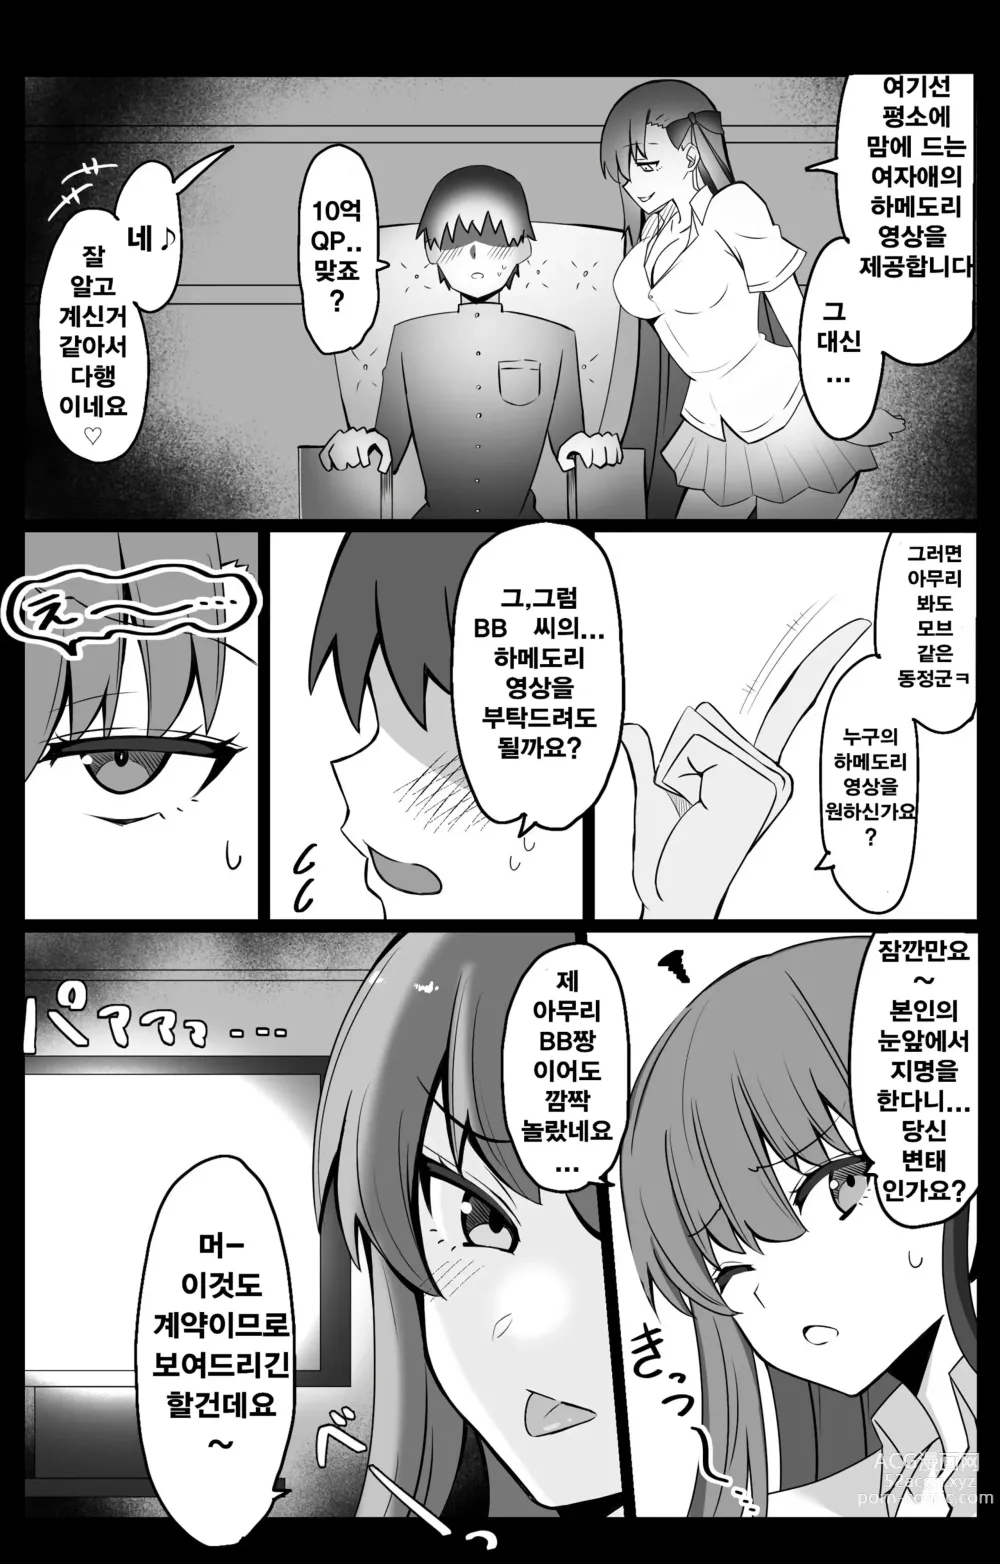 Page 2 of doujinshi 『칼데아 학원 BB채널부』 01~BB편